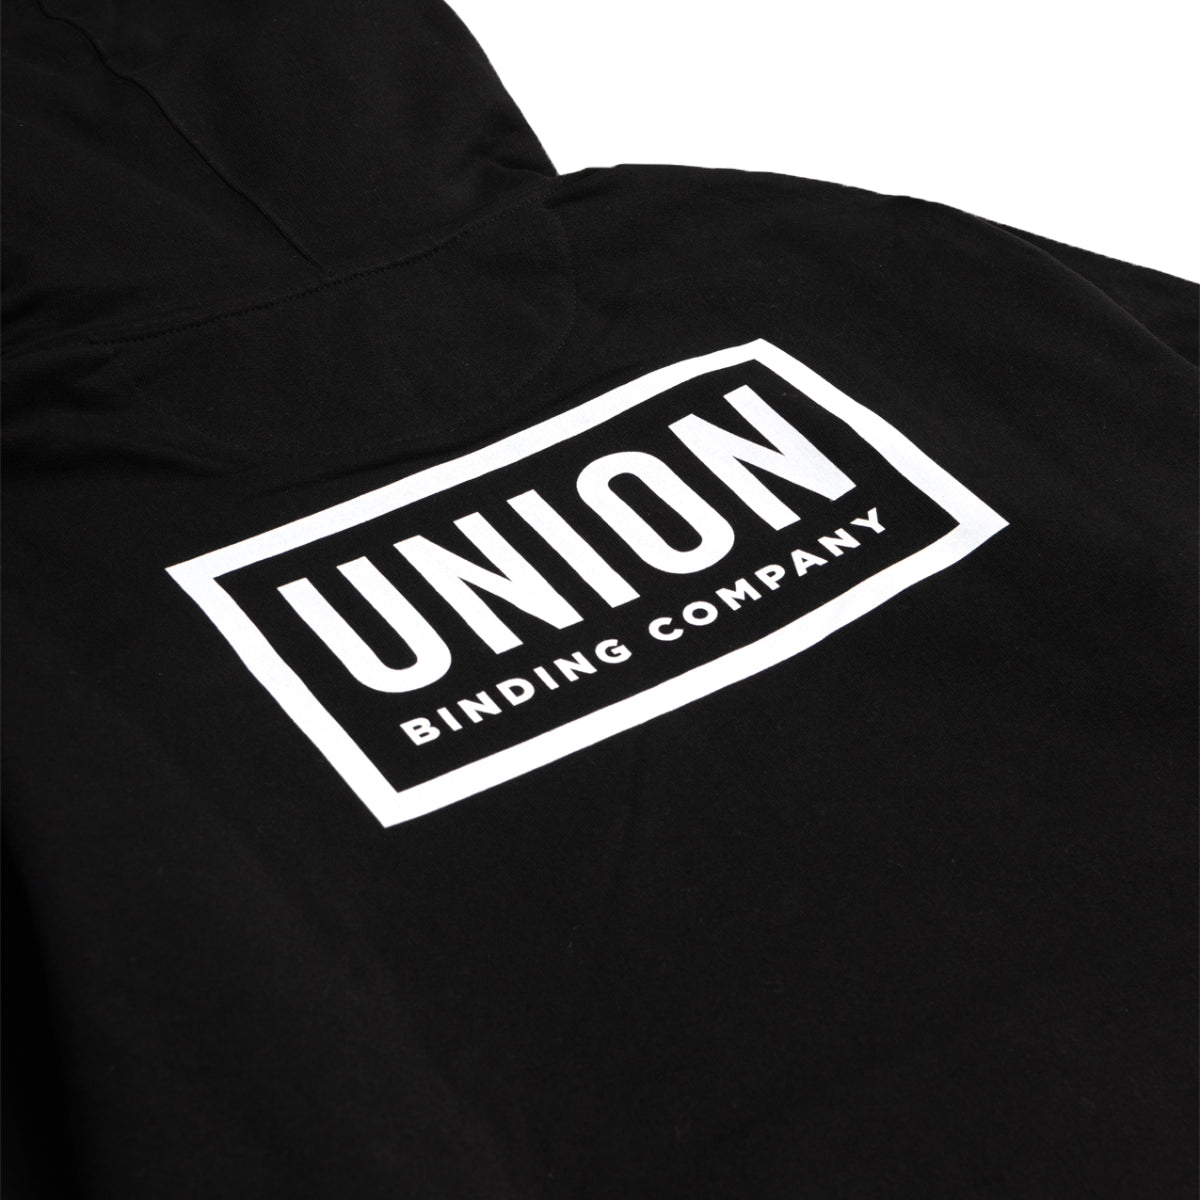 Union Binding - Unisex Team Hoodie - Black